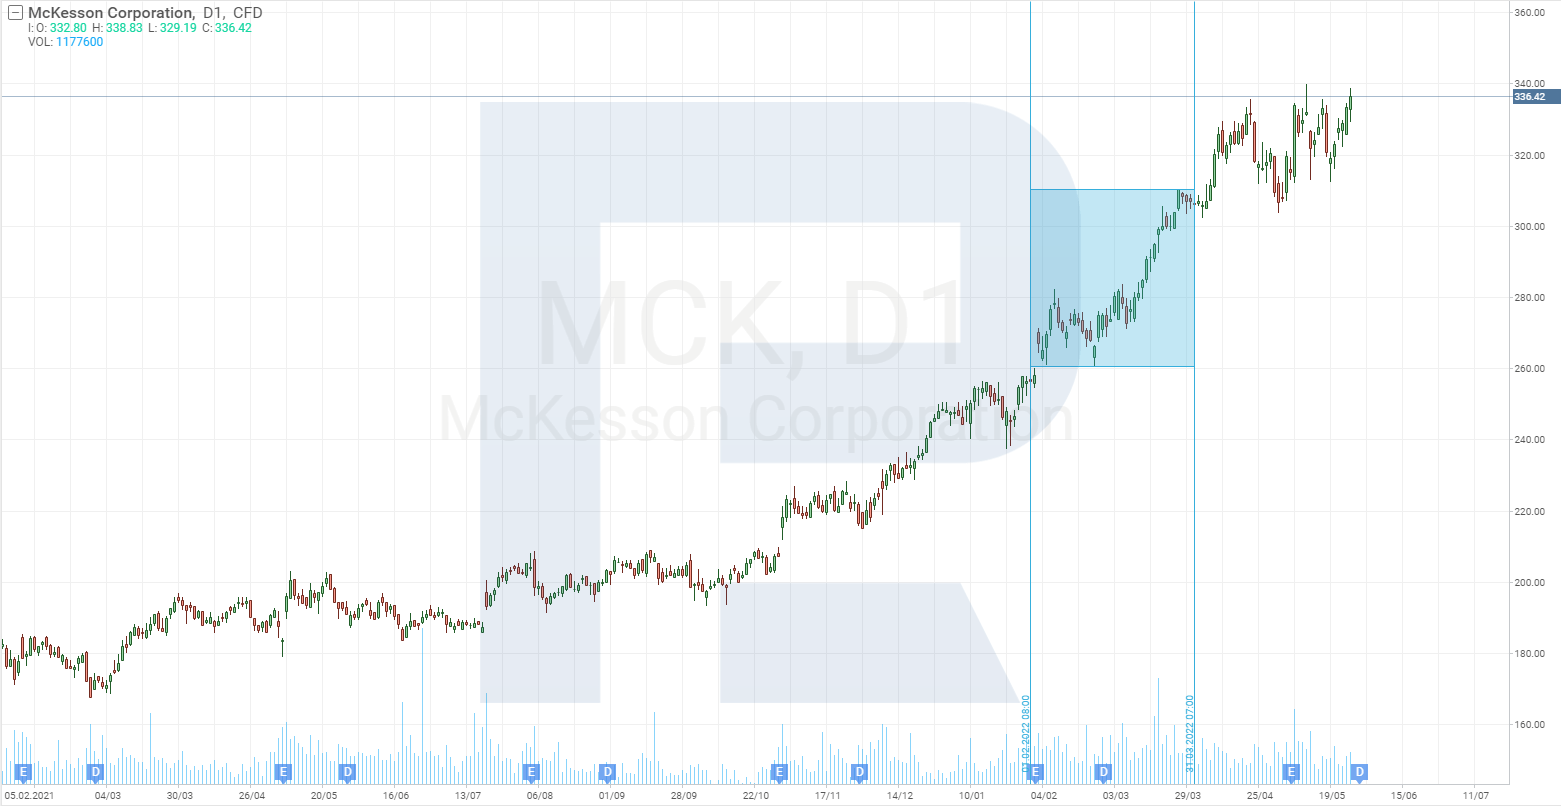 Biểu đồ giá cổ phiếu của McKesson Corporation